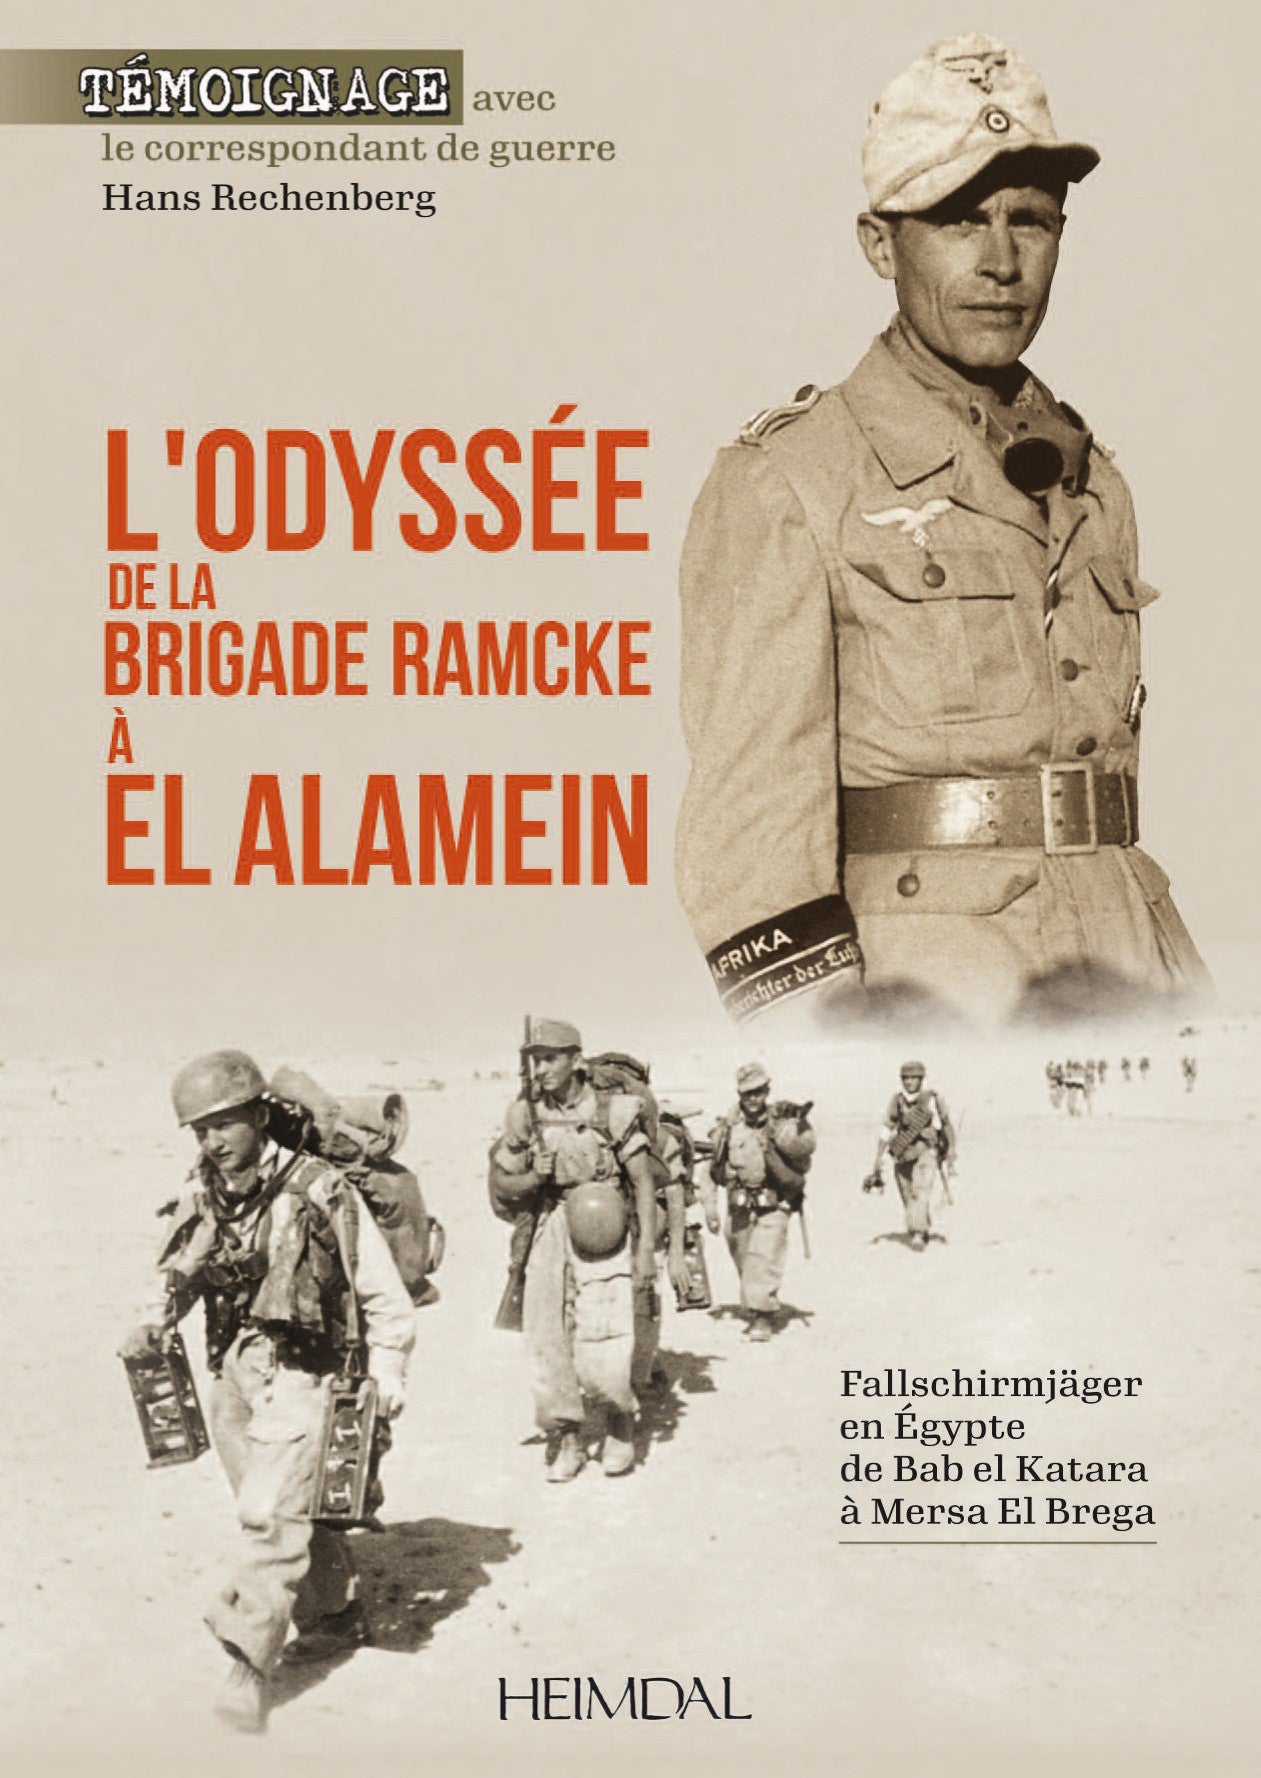 Die Odyssee der Brigade Ramcke in El Alamein 